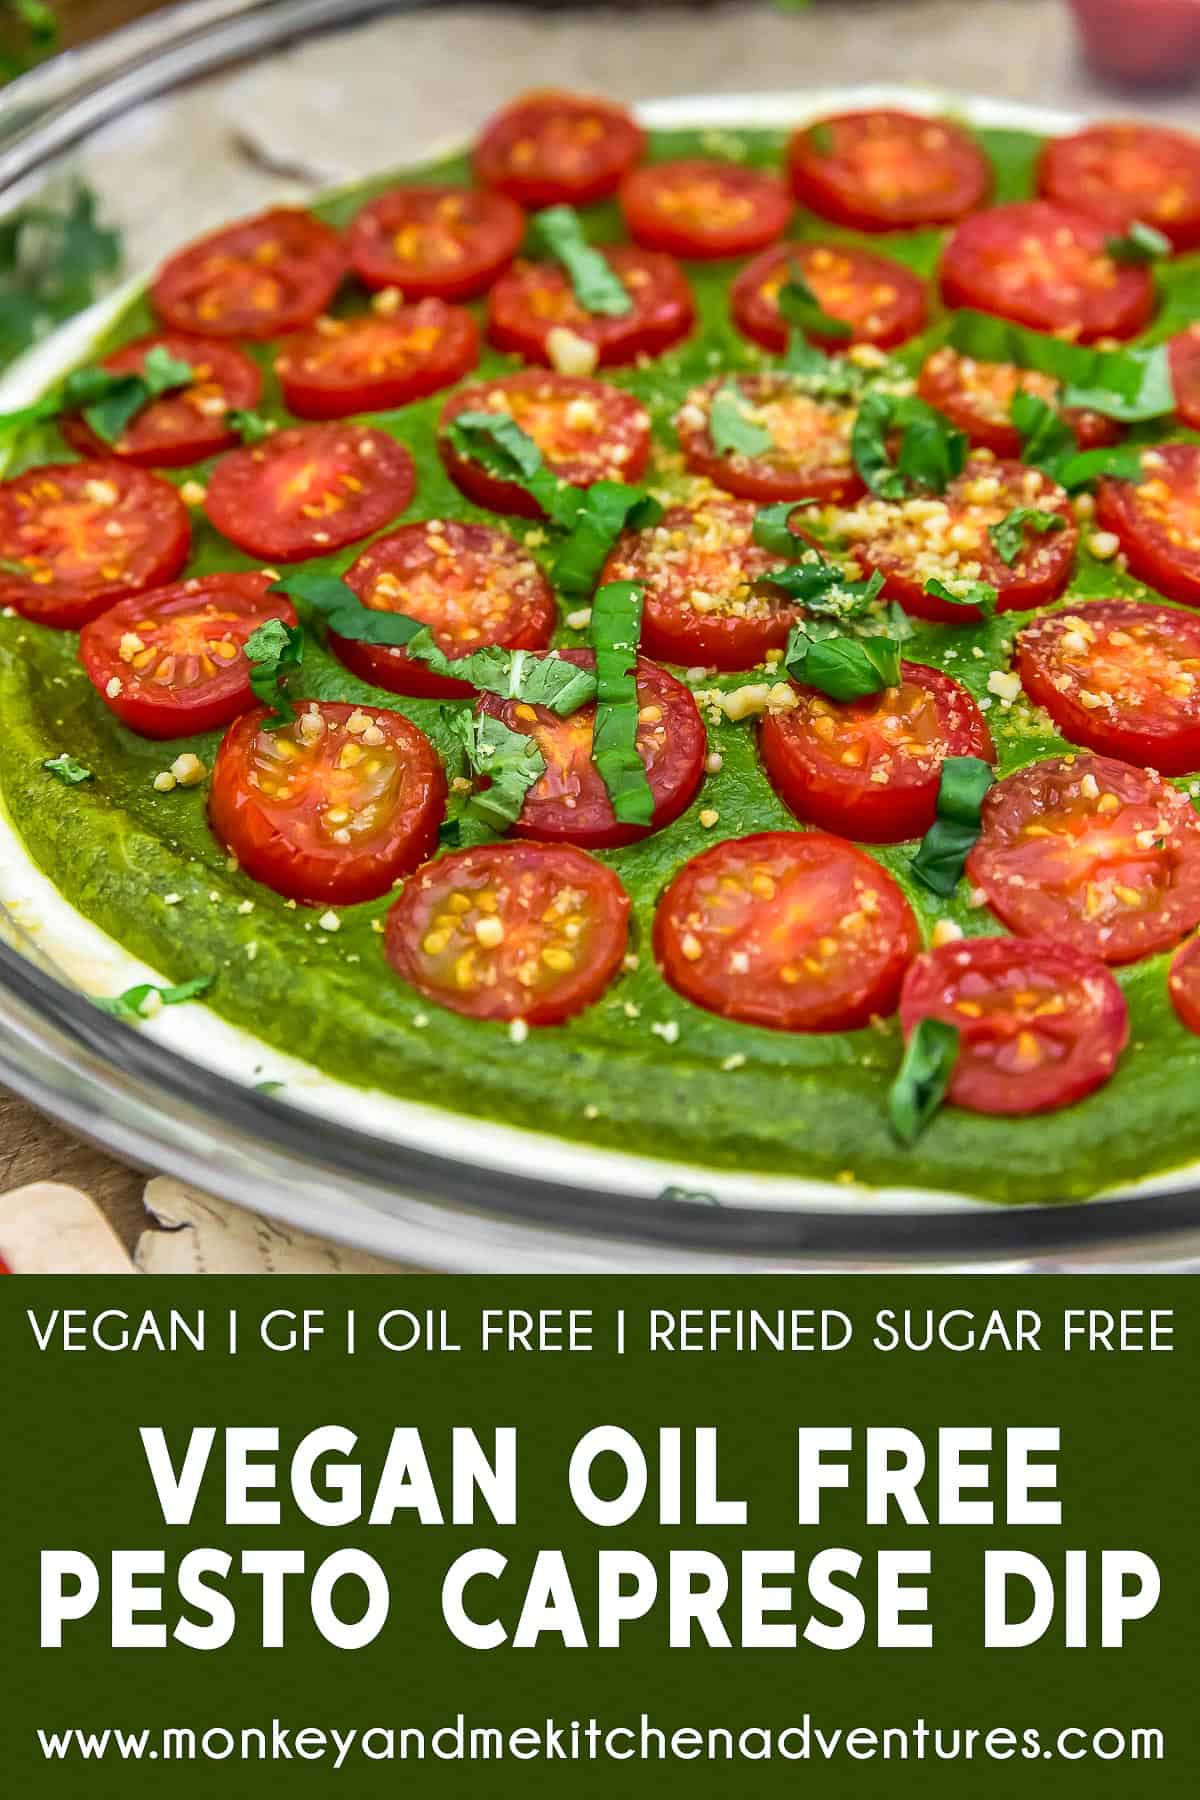 Vegan Oil Free Pesto Caprese Dip with text description